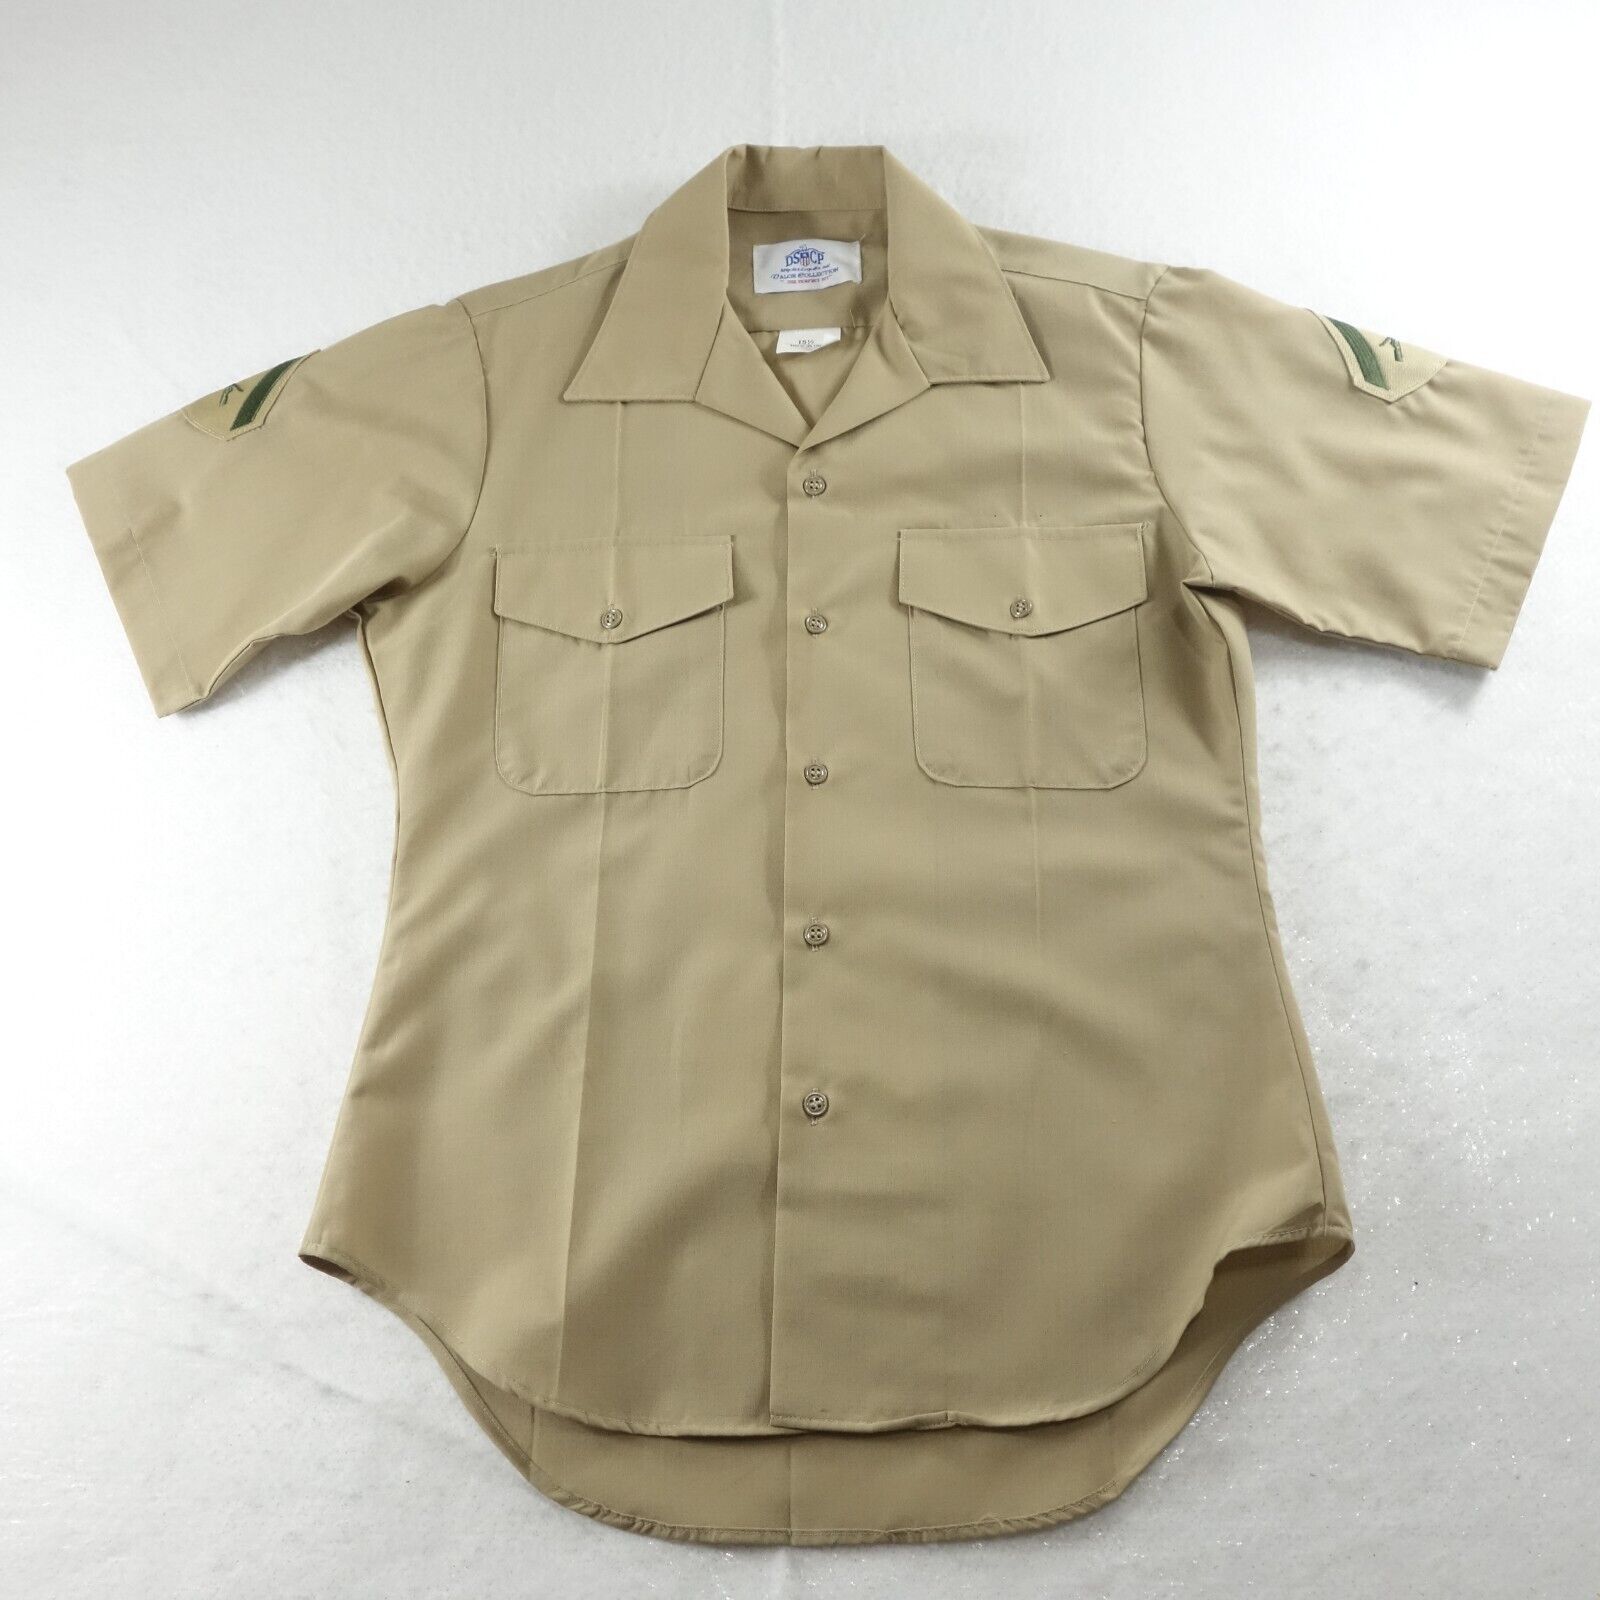 DSCP Shirt Mens Medium Size 15.5 Brown Uniform USAF Air Force Pilot Military